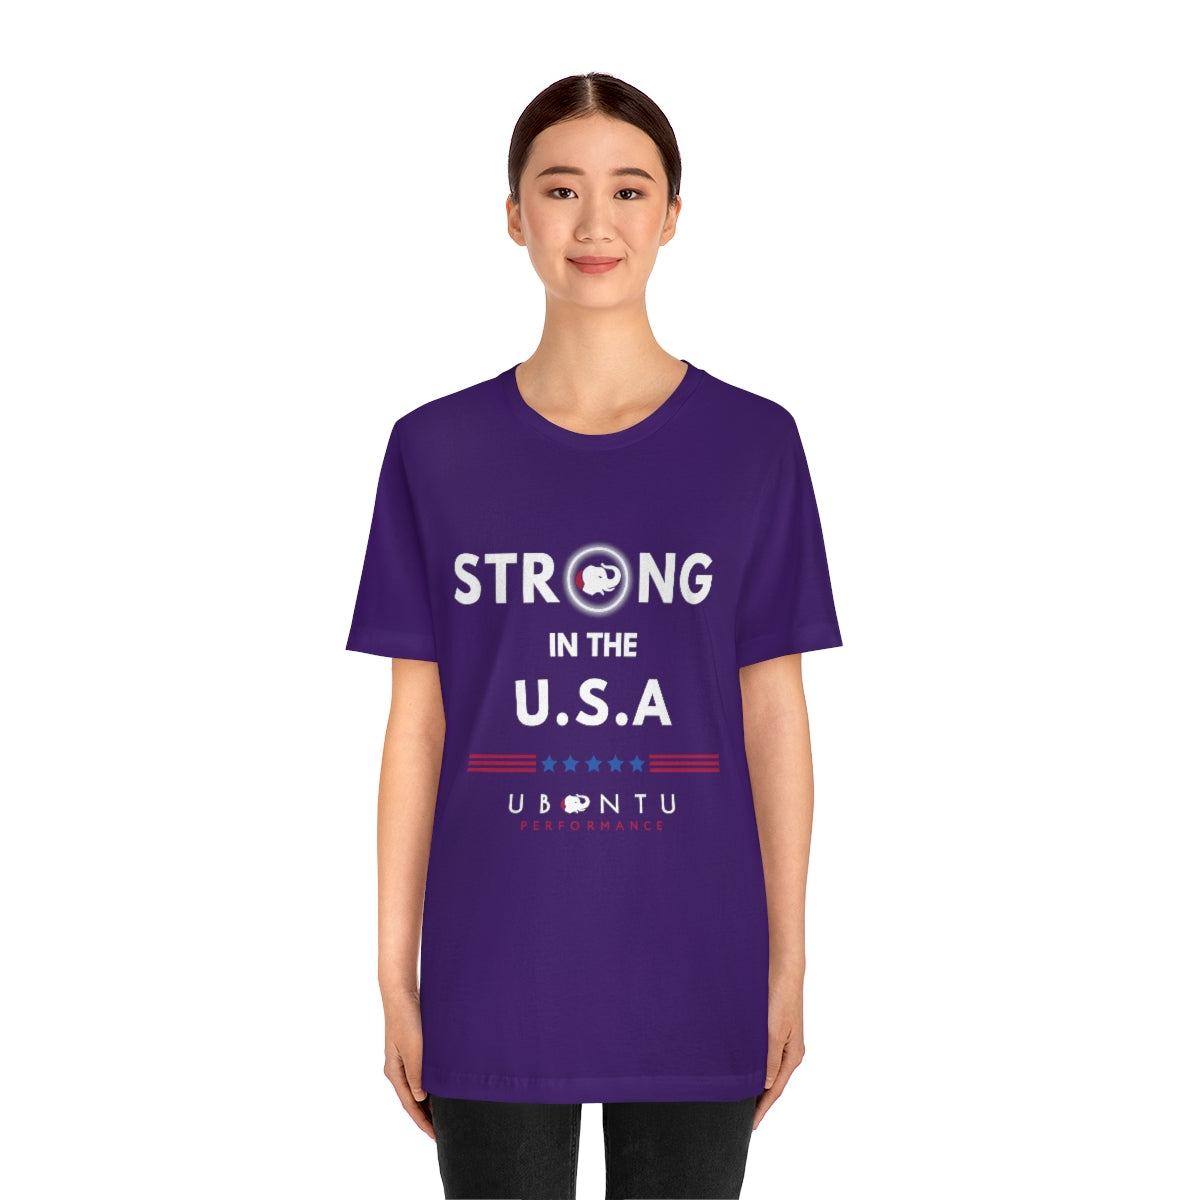 U S A flag colors  men's women's unisex tee Ubuntu Performance strong USA fans  gift t shirt